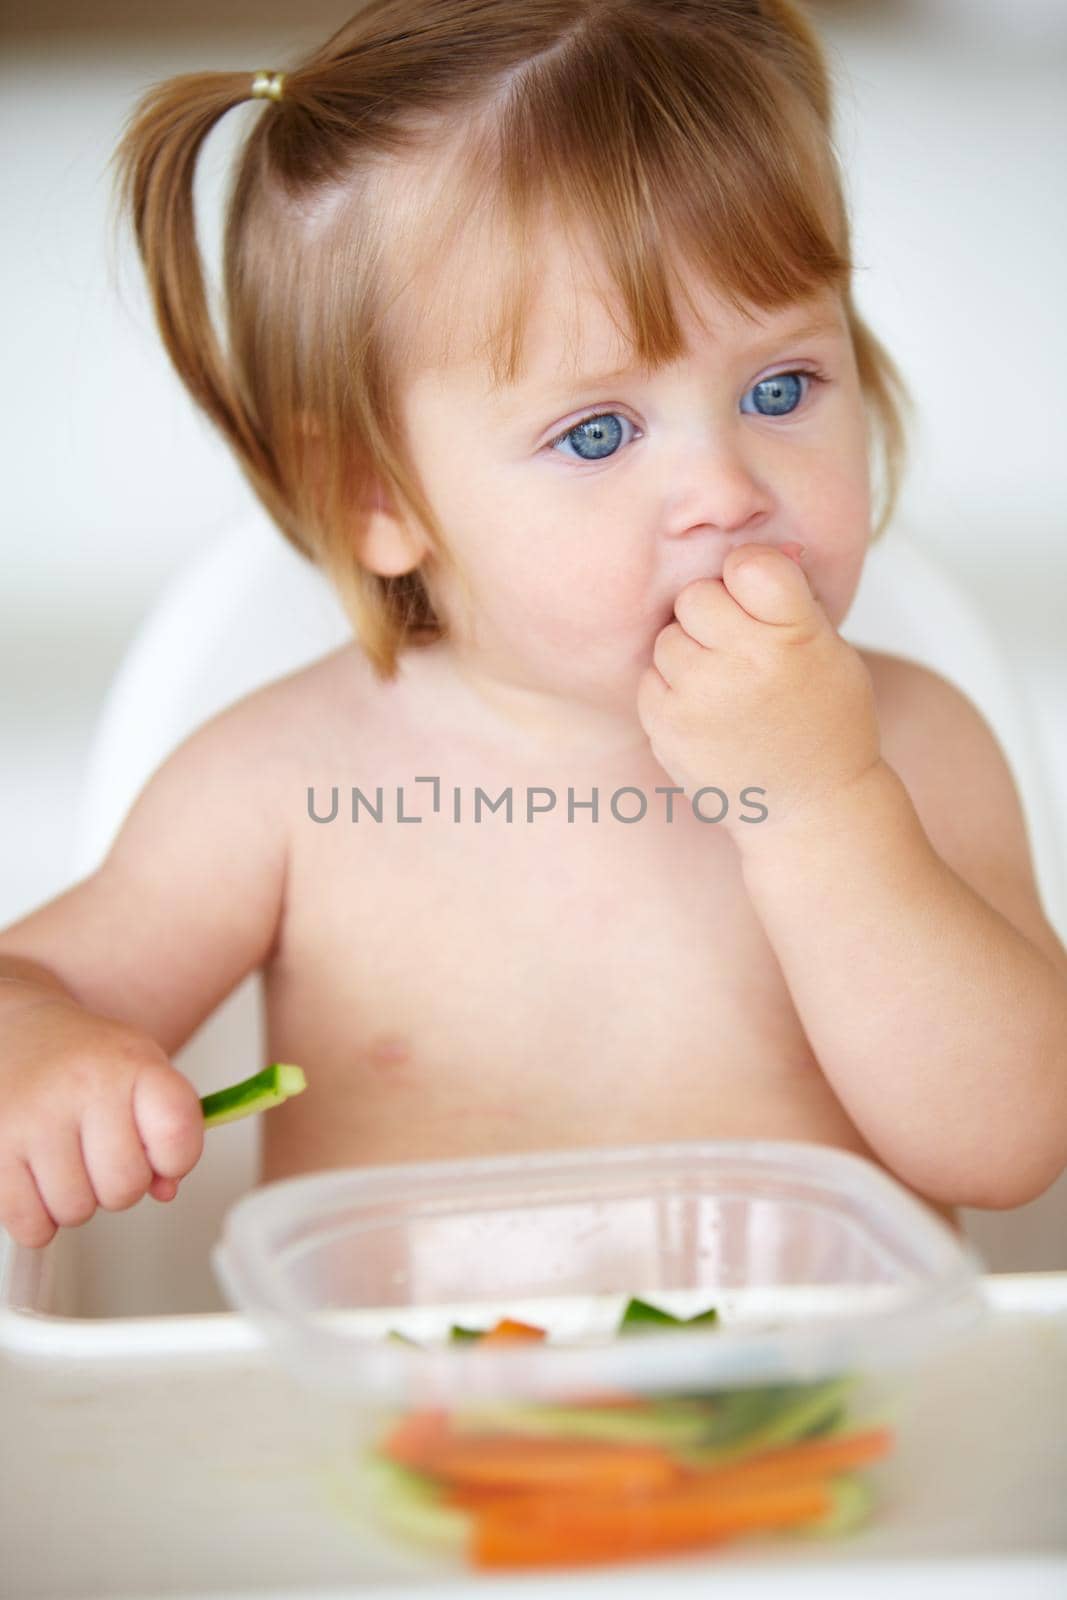 A cute little girl eating vegetables.